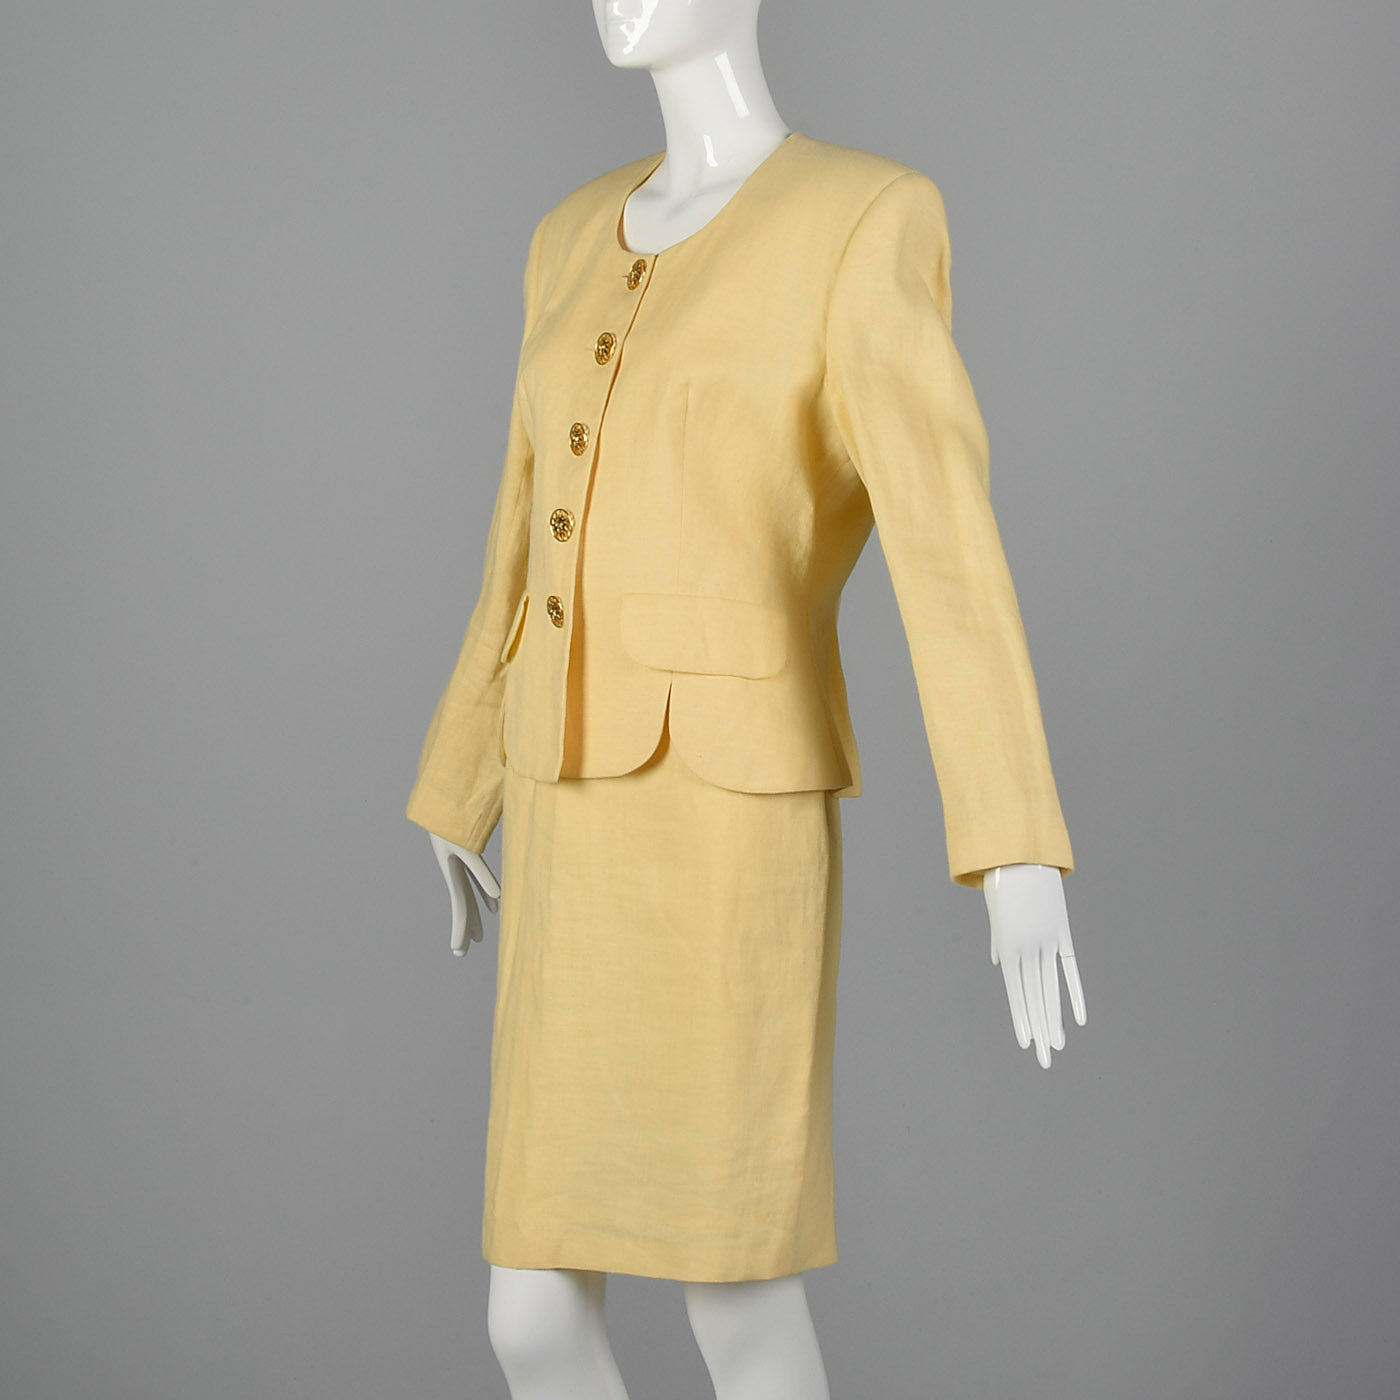 1990s Moschino Cheap & Chic Yellow Linen Skirt Suit